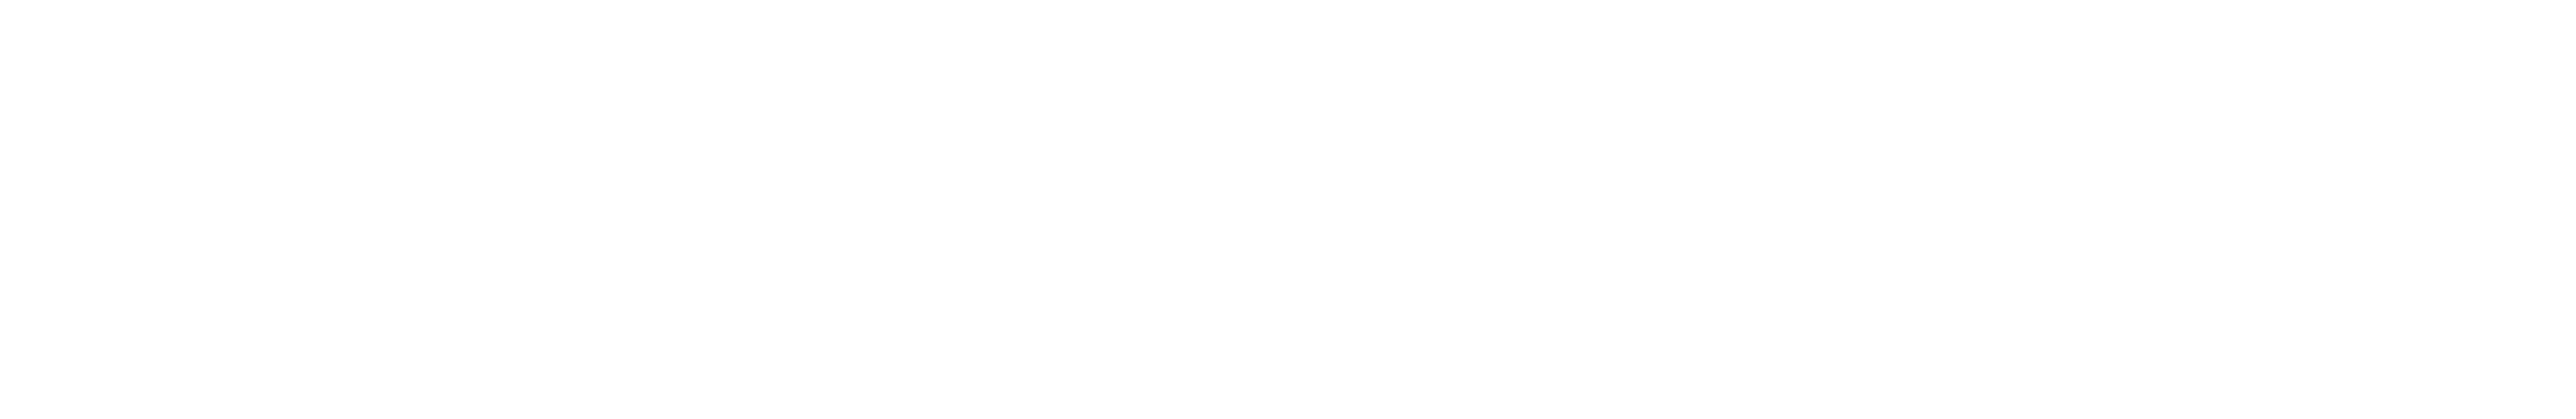 zurface-logo-med-tagline-vit-rgb